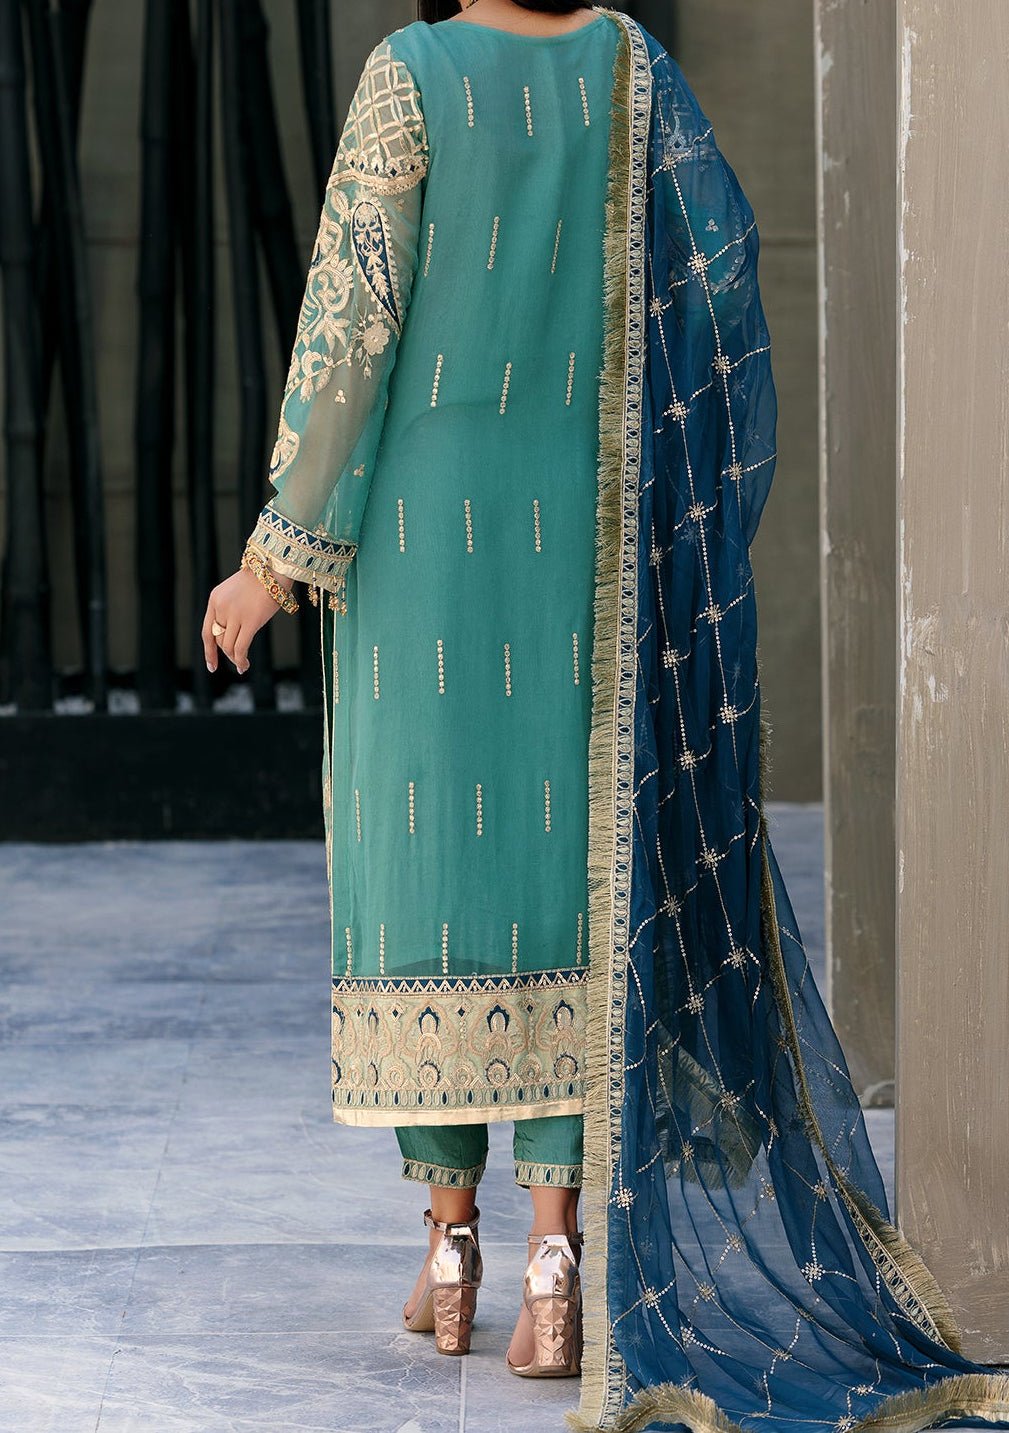 Emaan Adeel Belle Robe Luxury Pakistani Dress - db18372